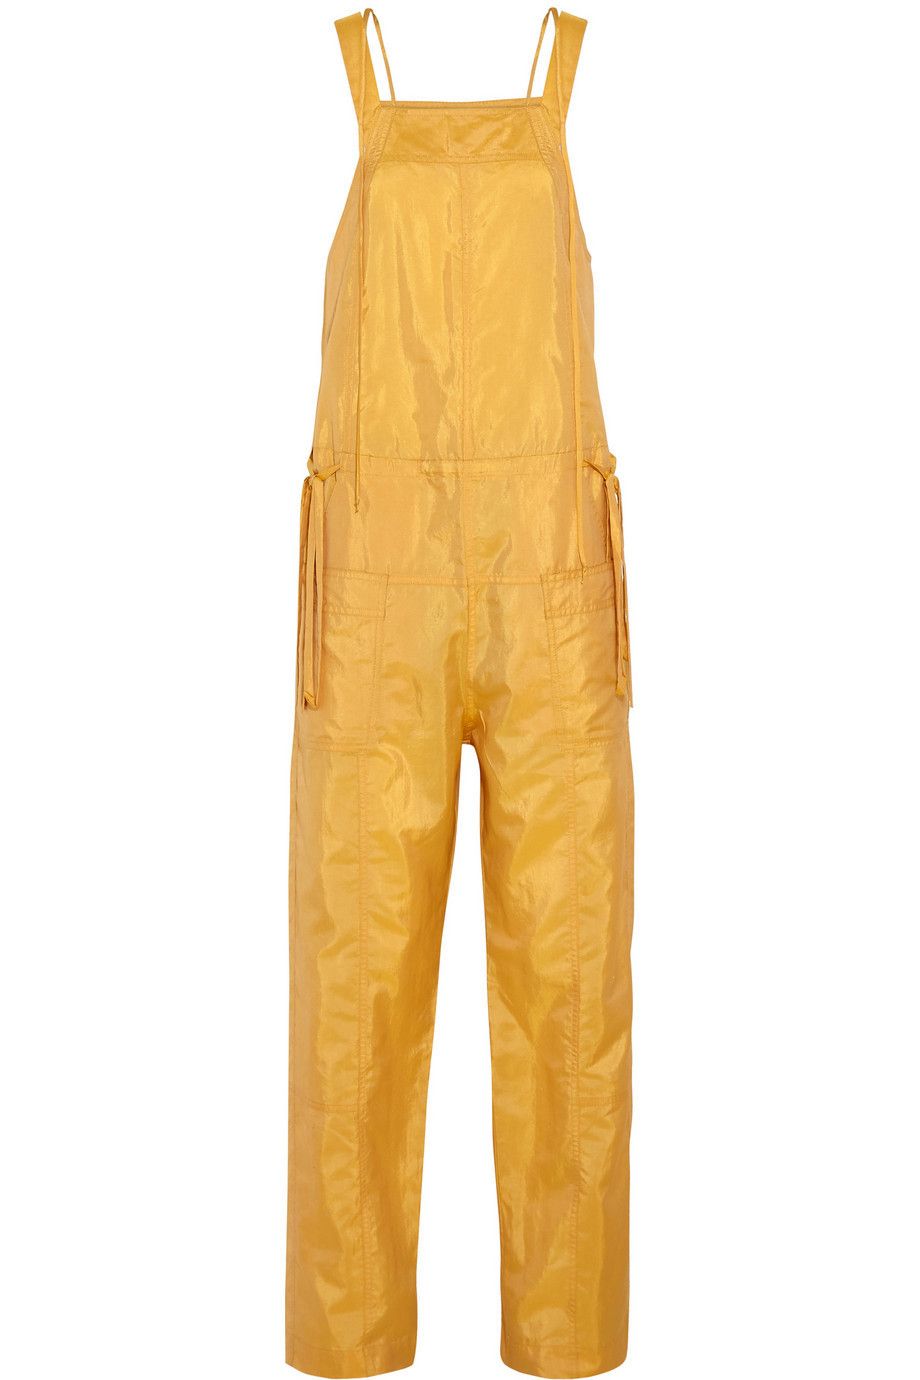 Brown, Yellow, Standing, Khaki, Workwear, Tan, Orange, Khaki pants, Personal protective equipment, Cargo pants, 